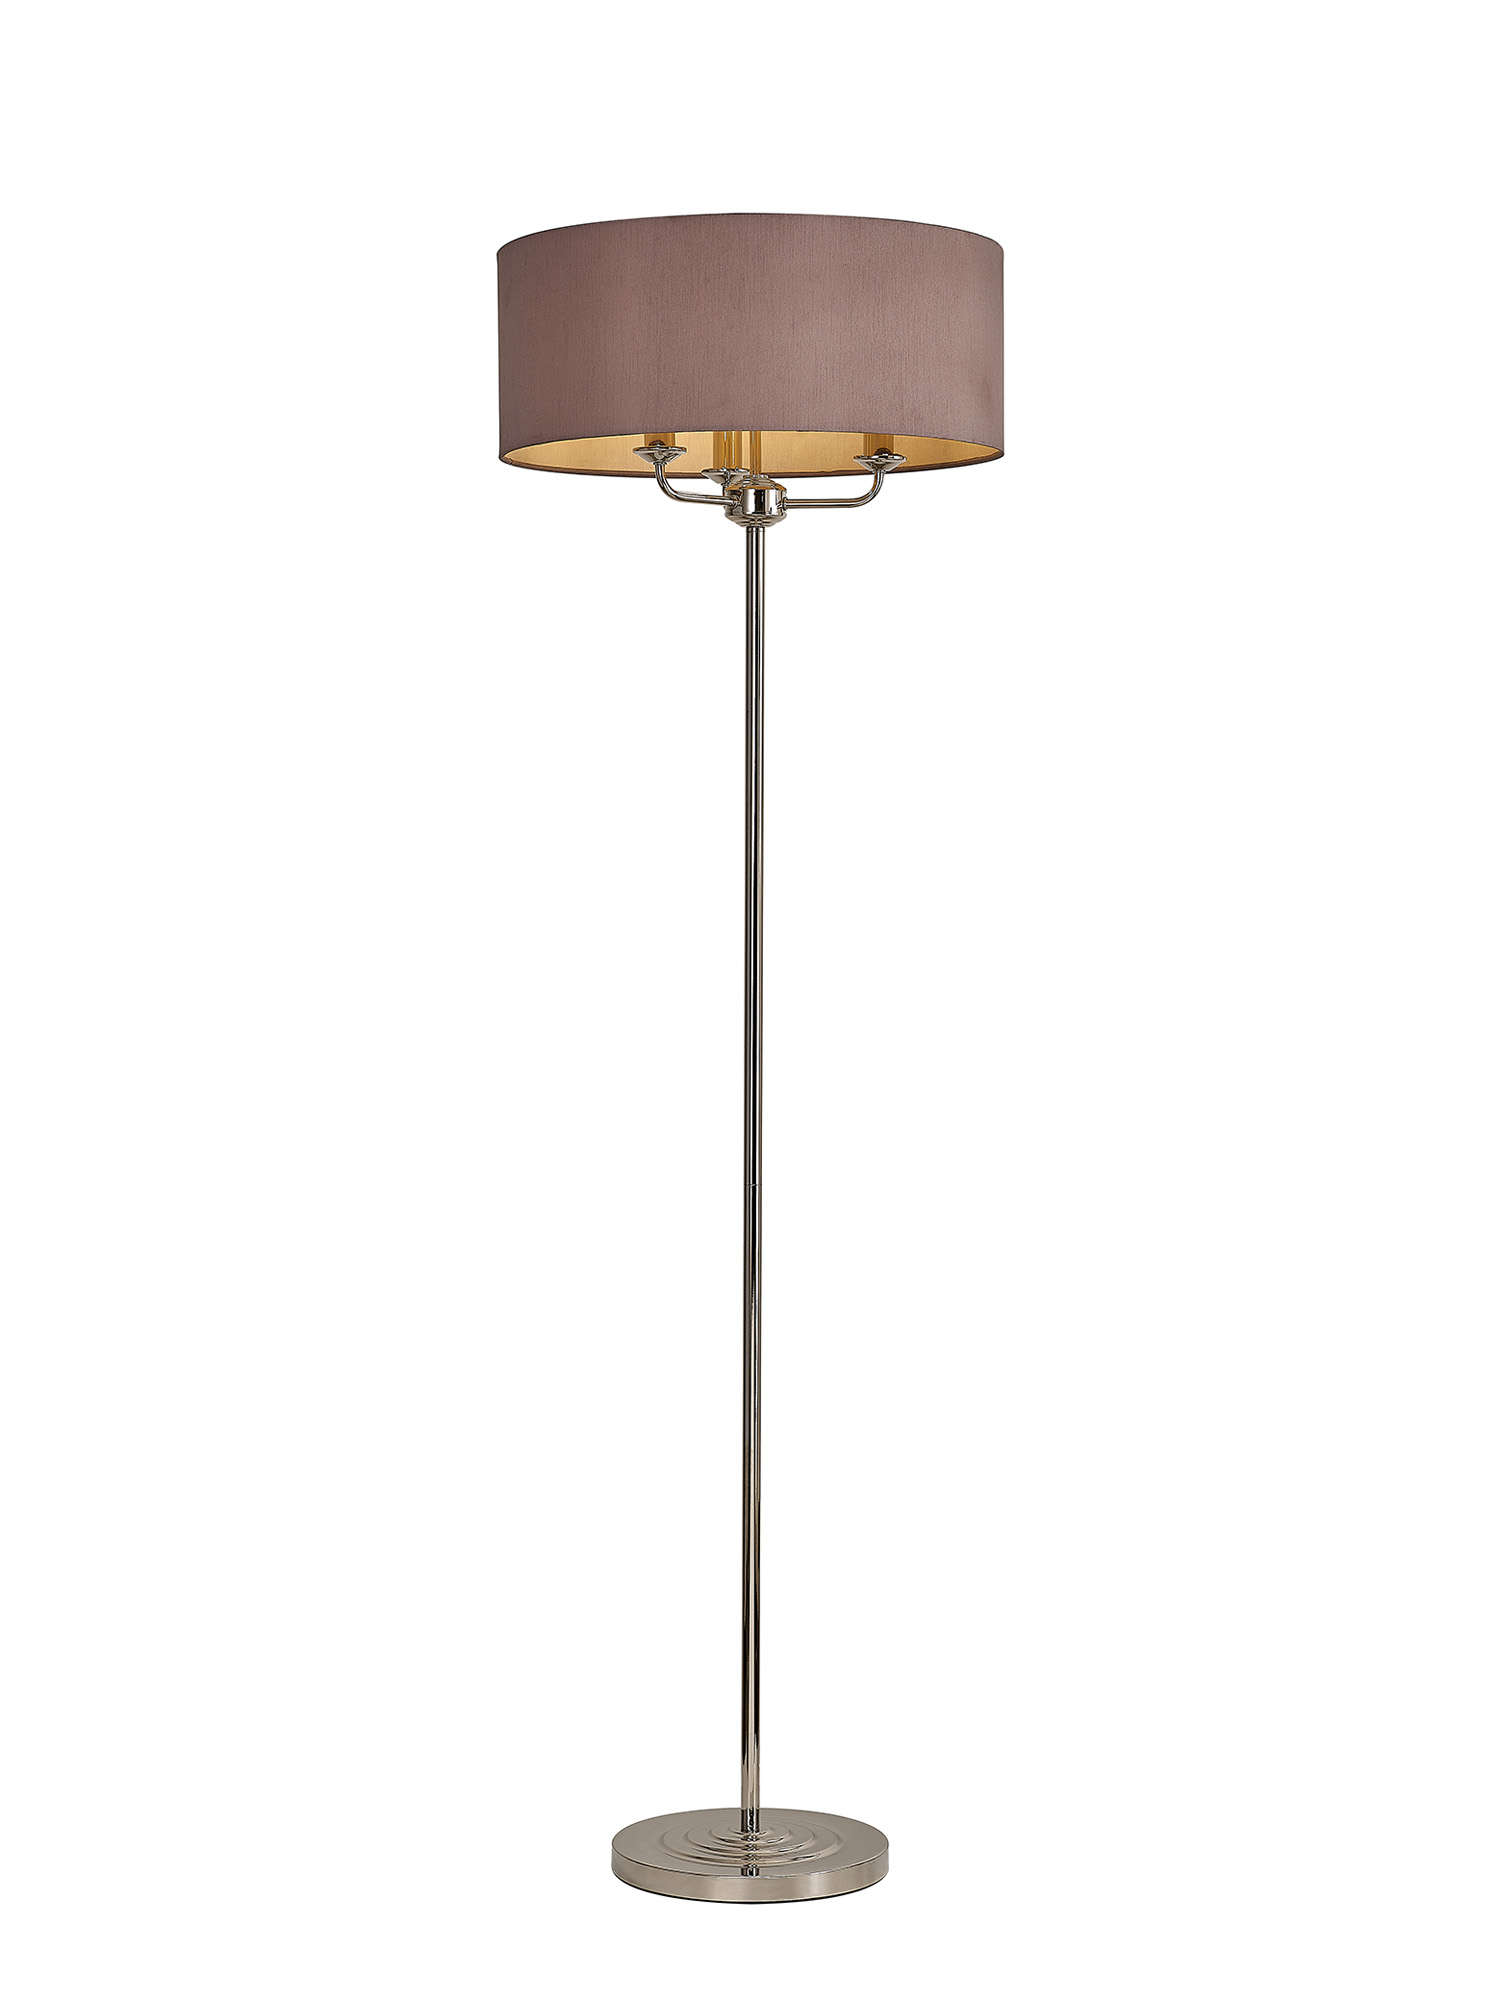 DK0898  Banyan 45cm 3 Light Floor Lamp Polished Nickel; Taupe